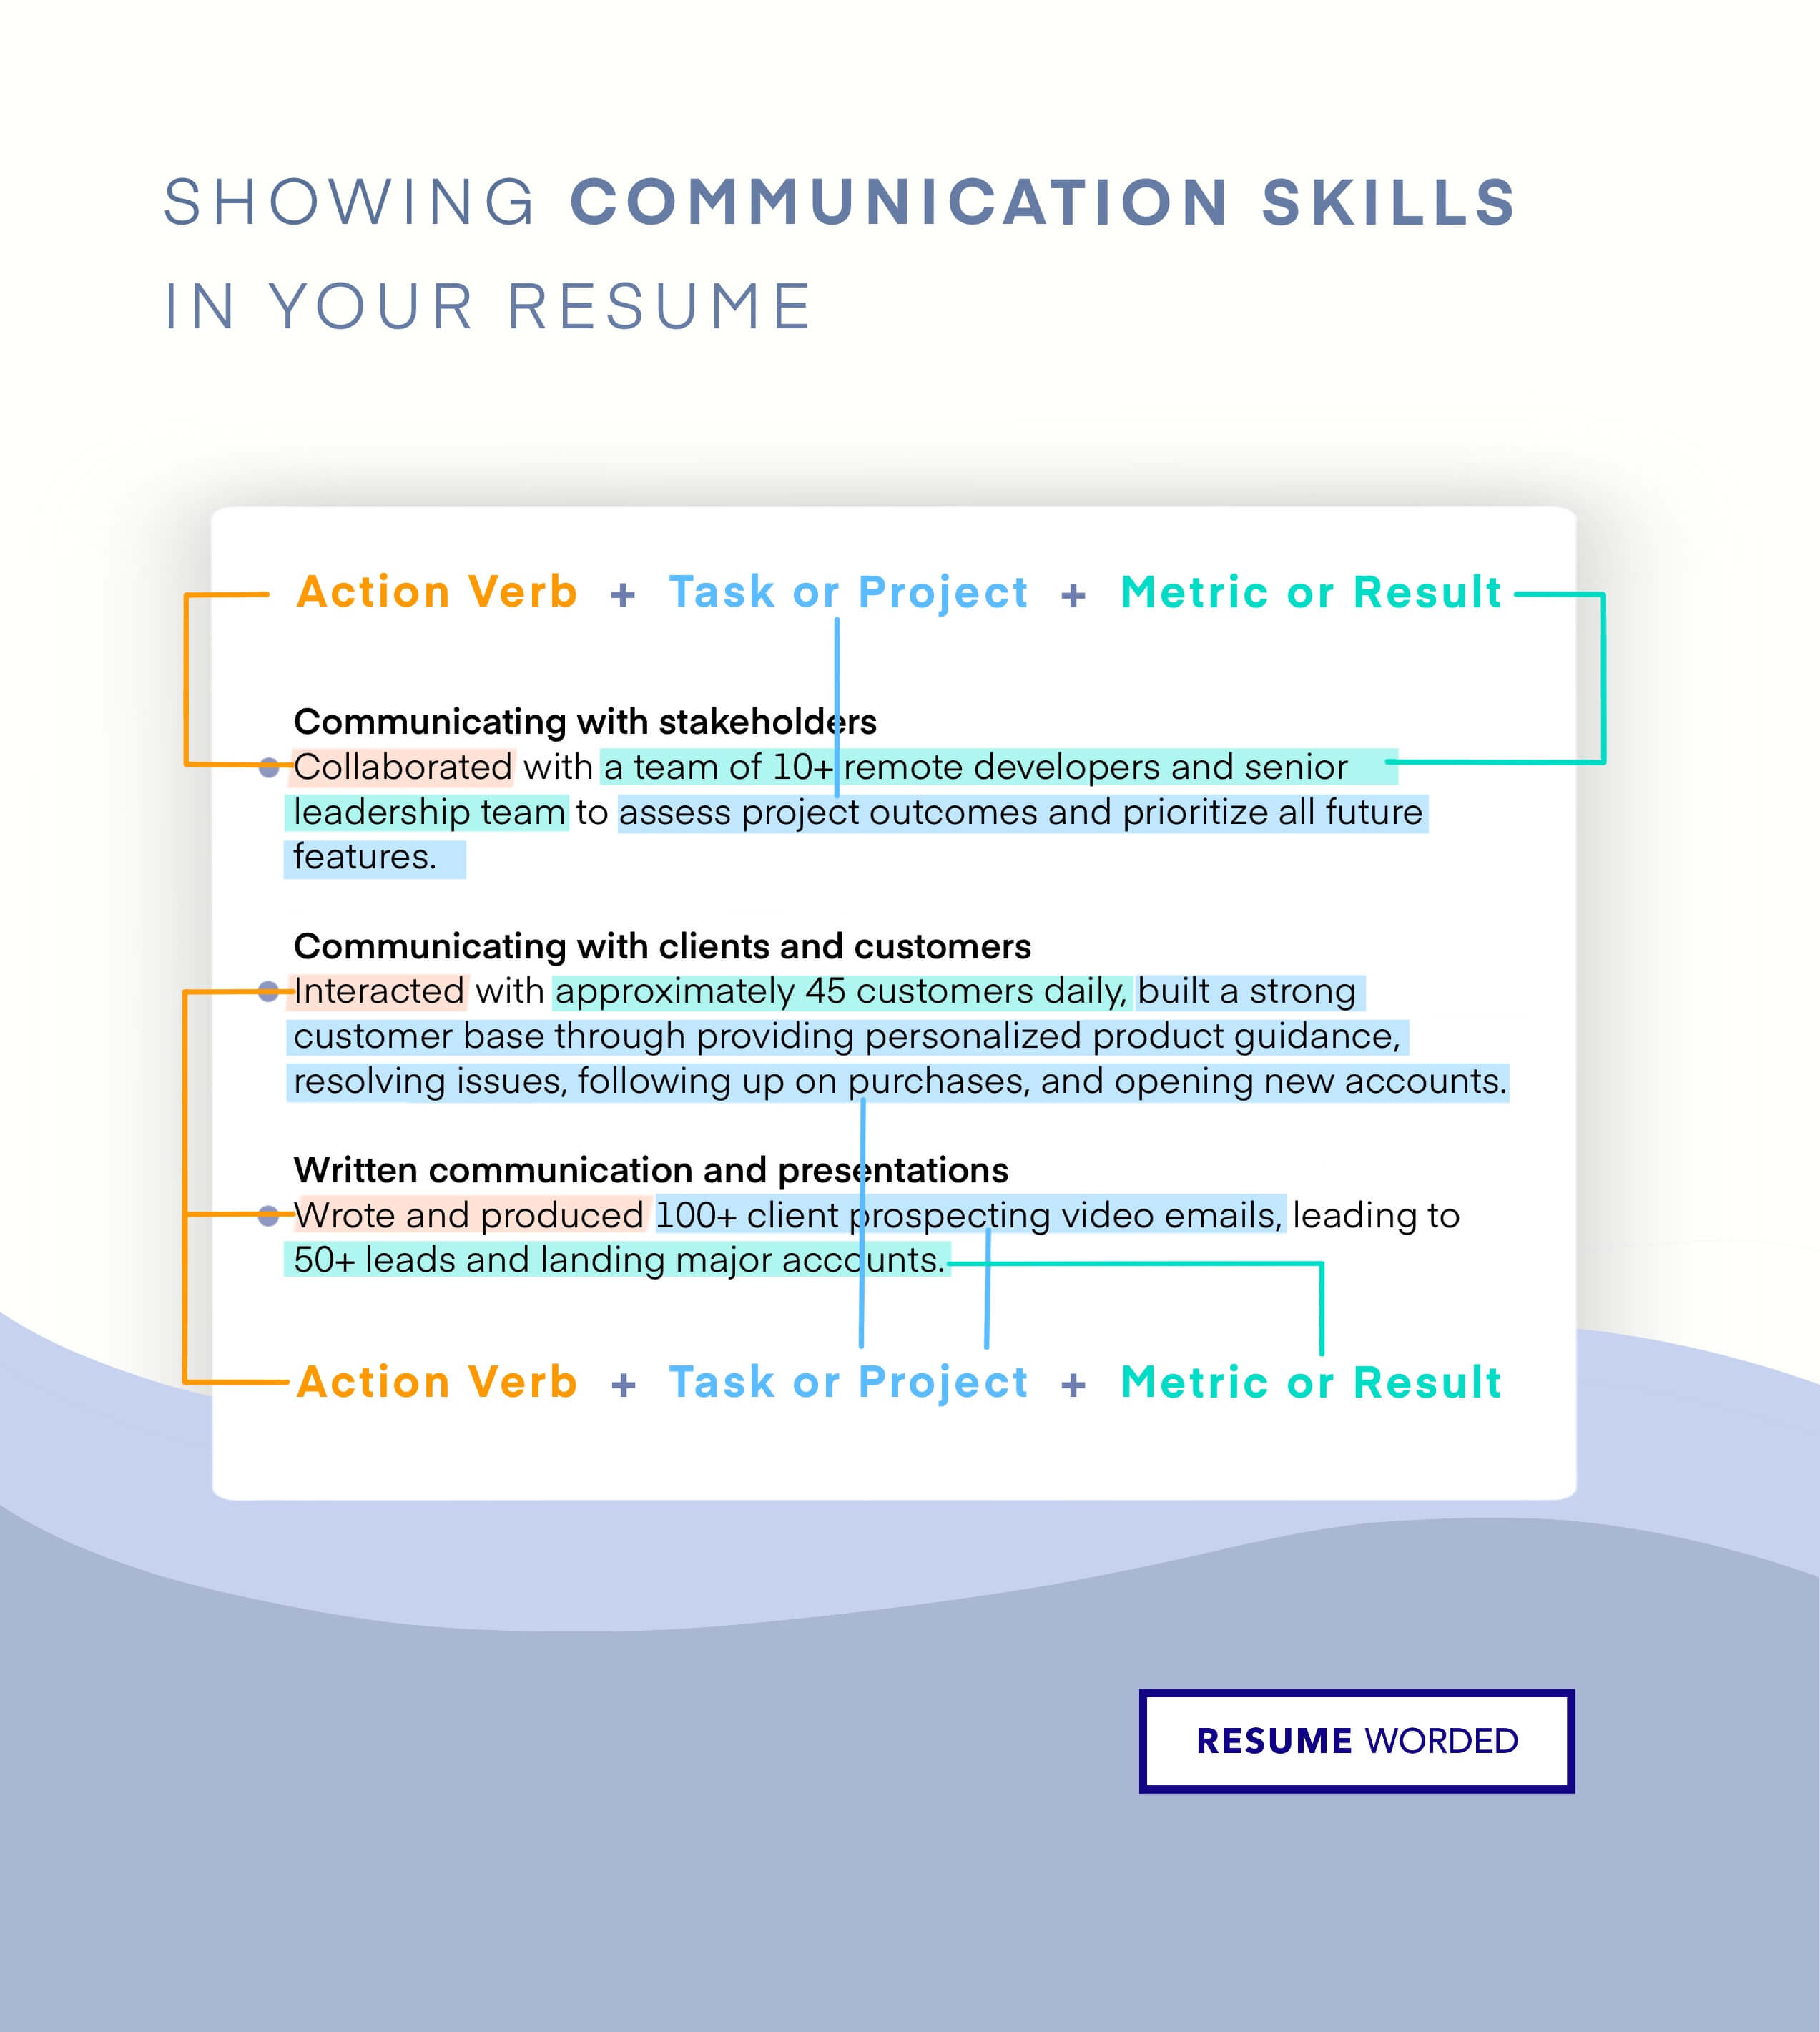 Emphasize your communication skills - Entry Level Customer Service Representative CV